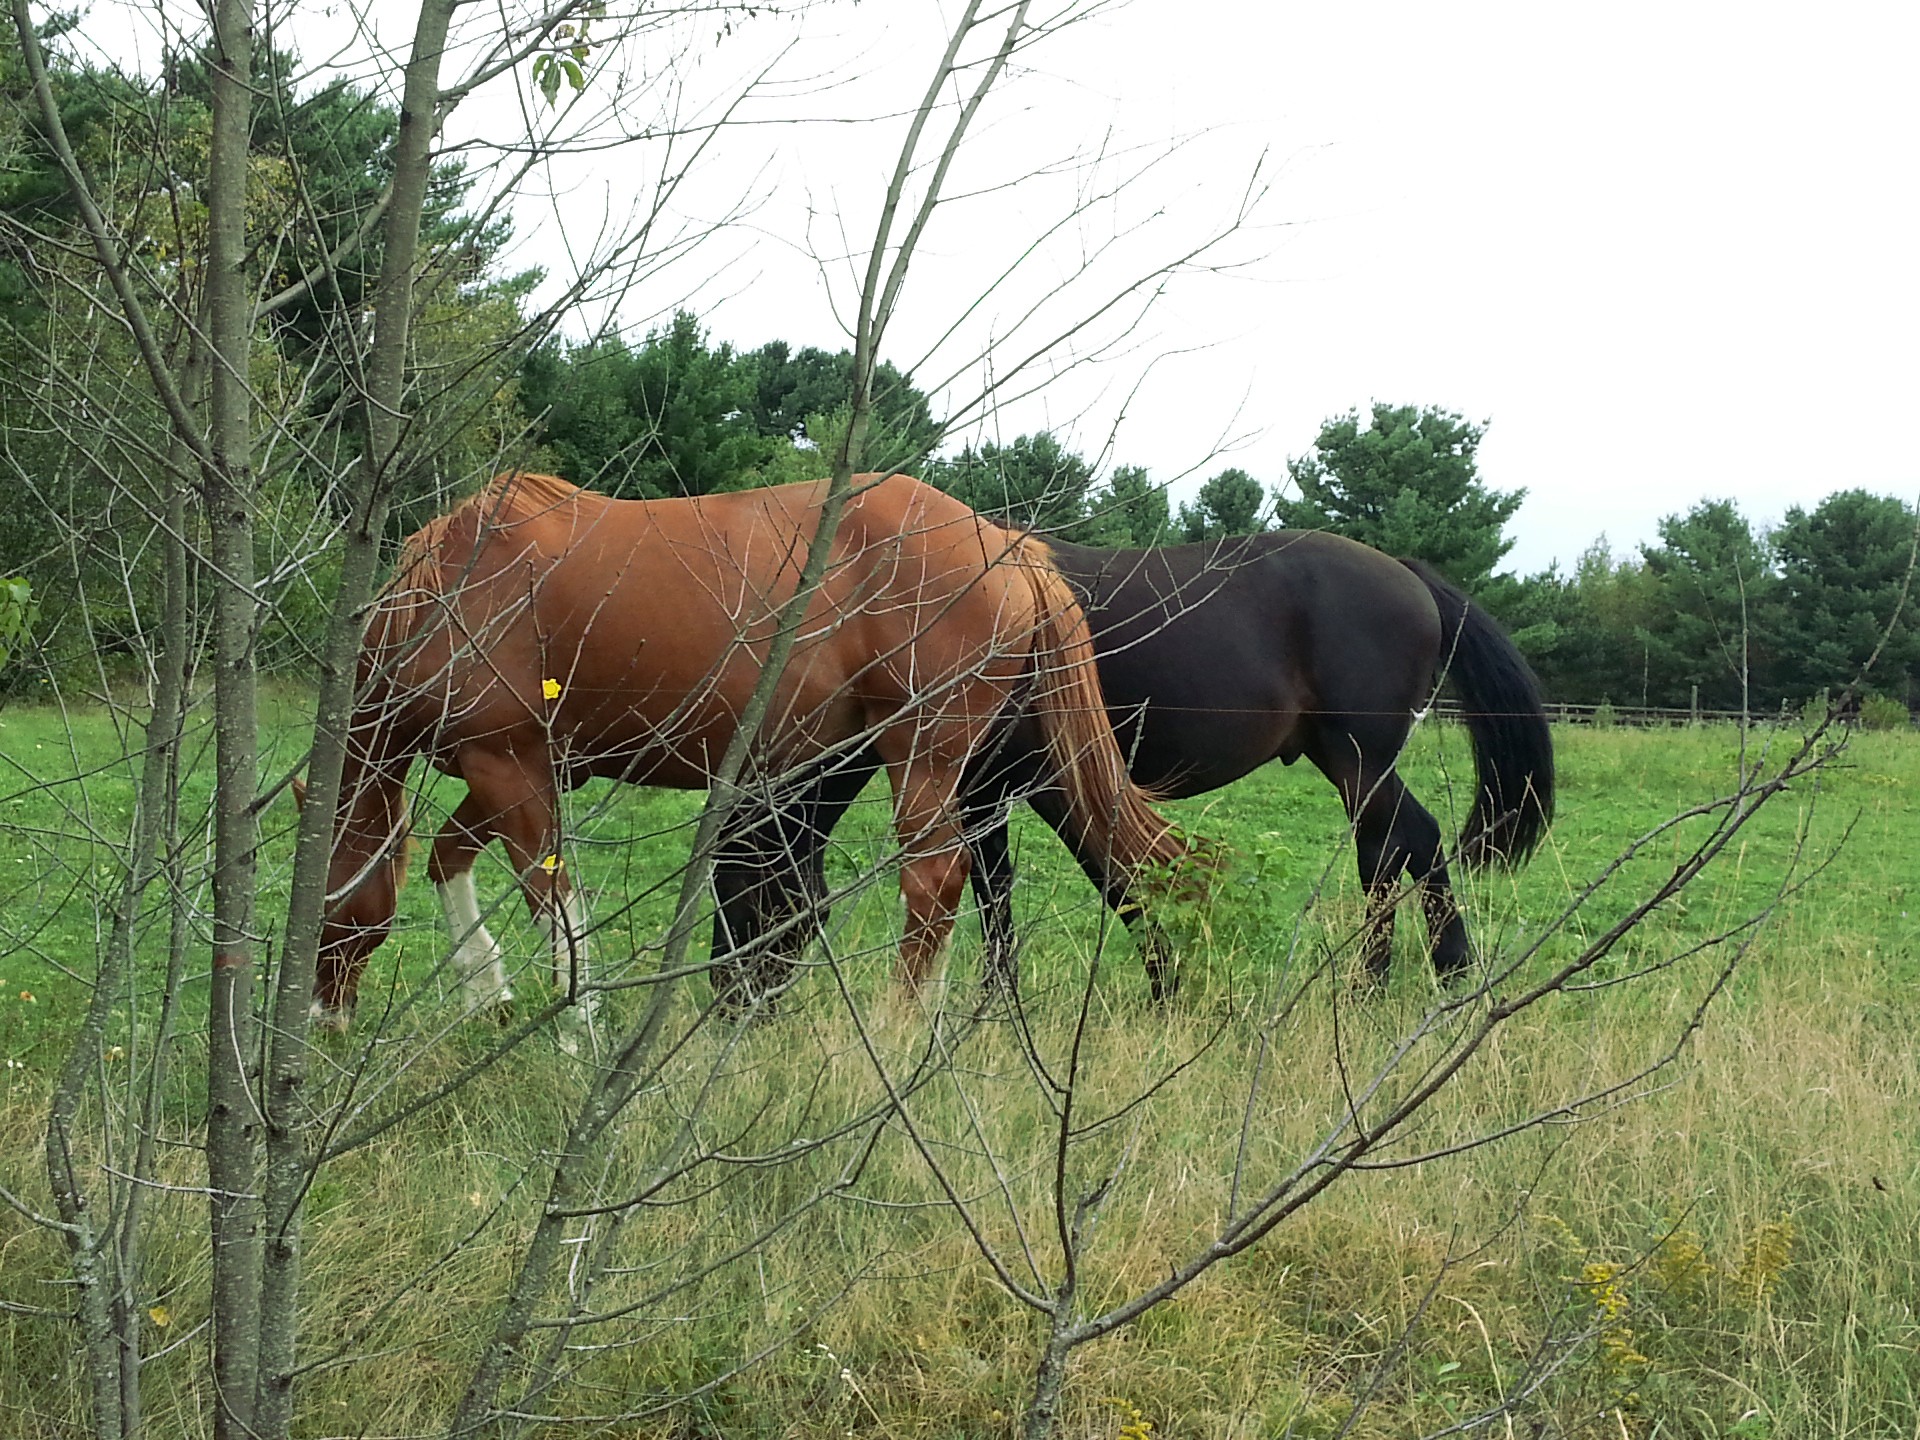 horse horses horseback free photo